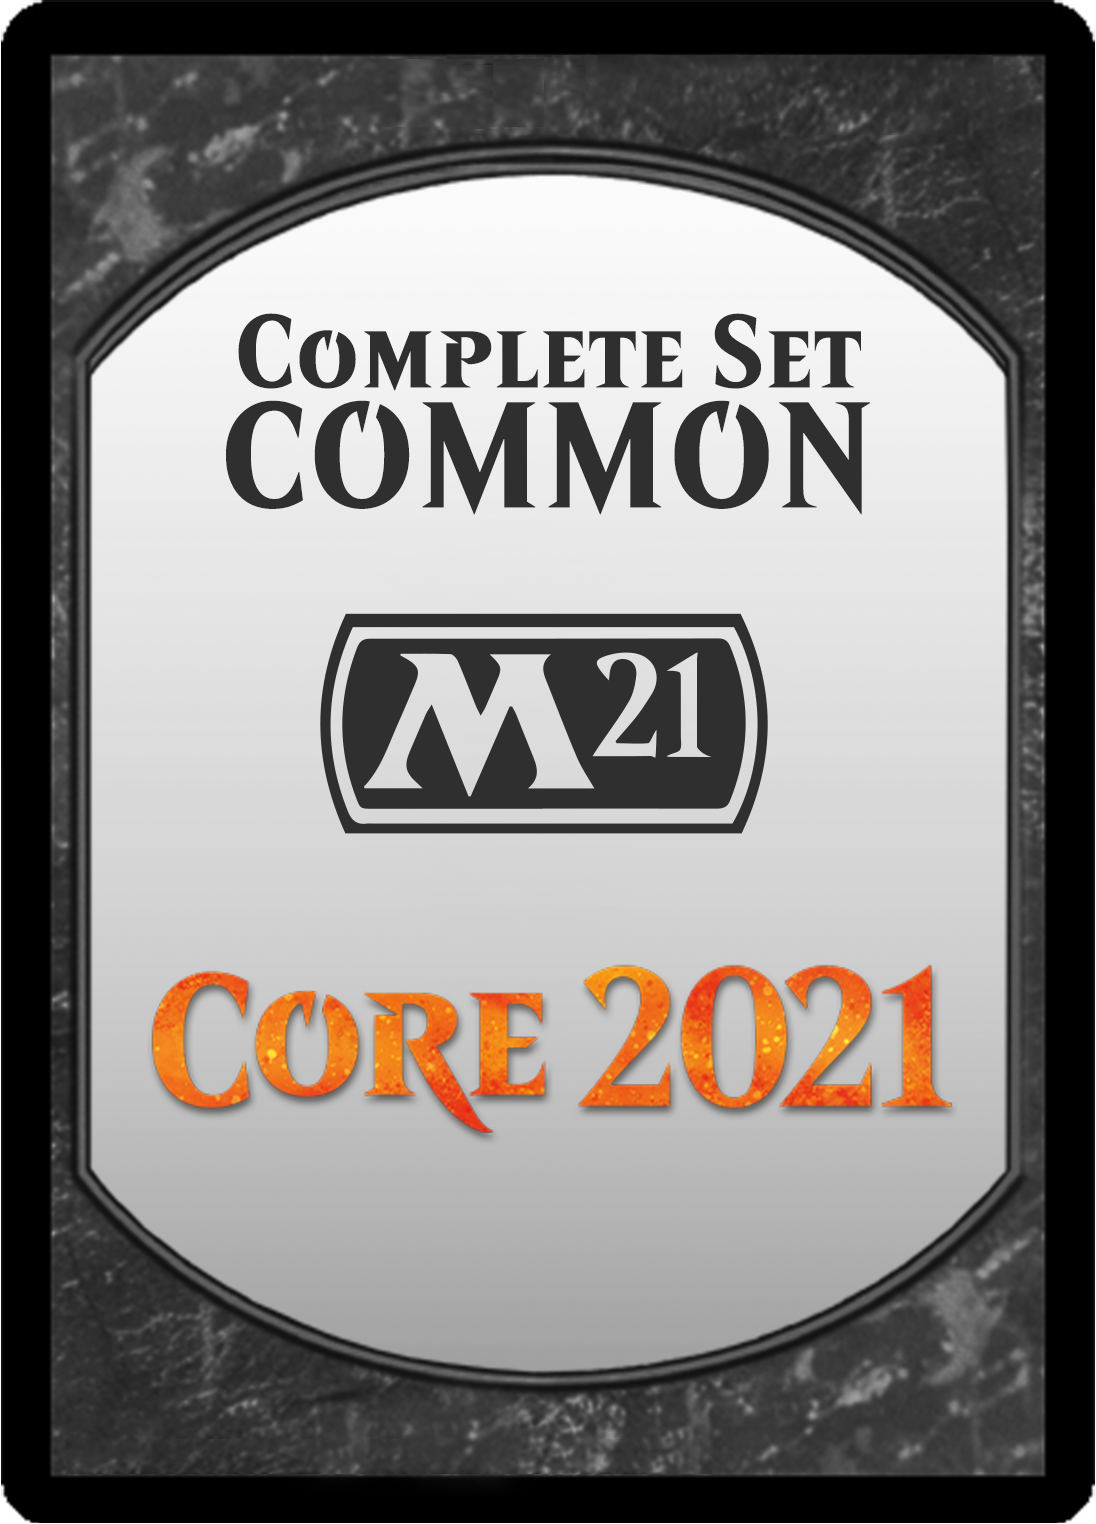 Core 2021: Common Set